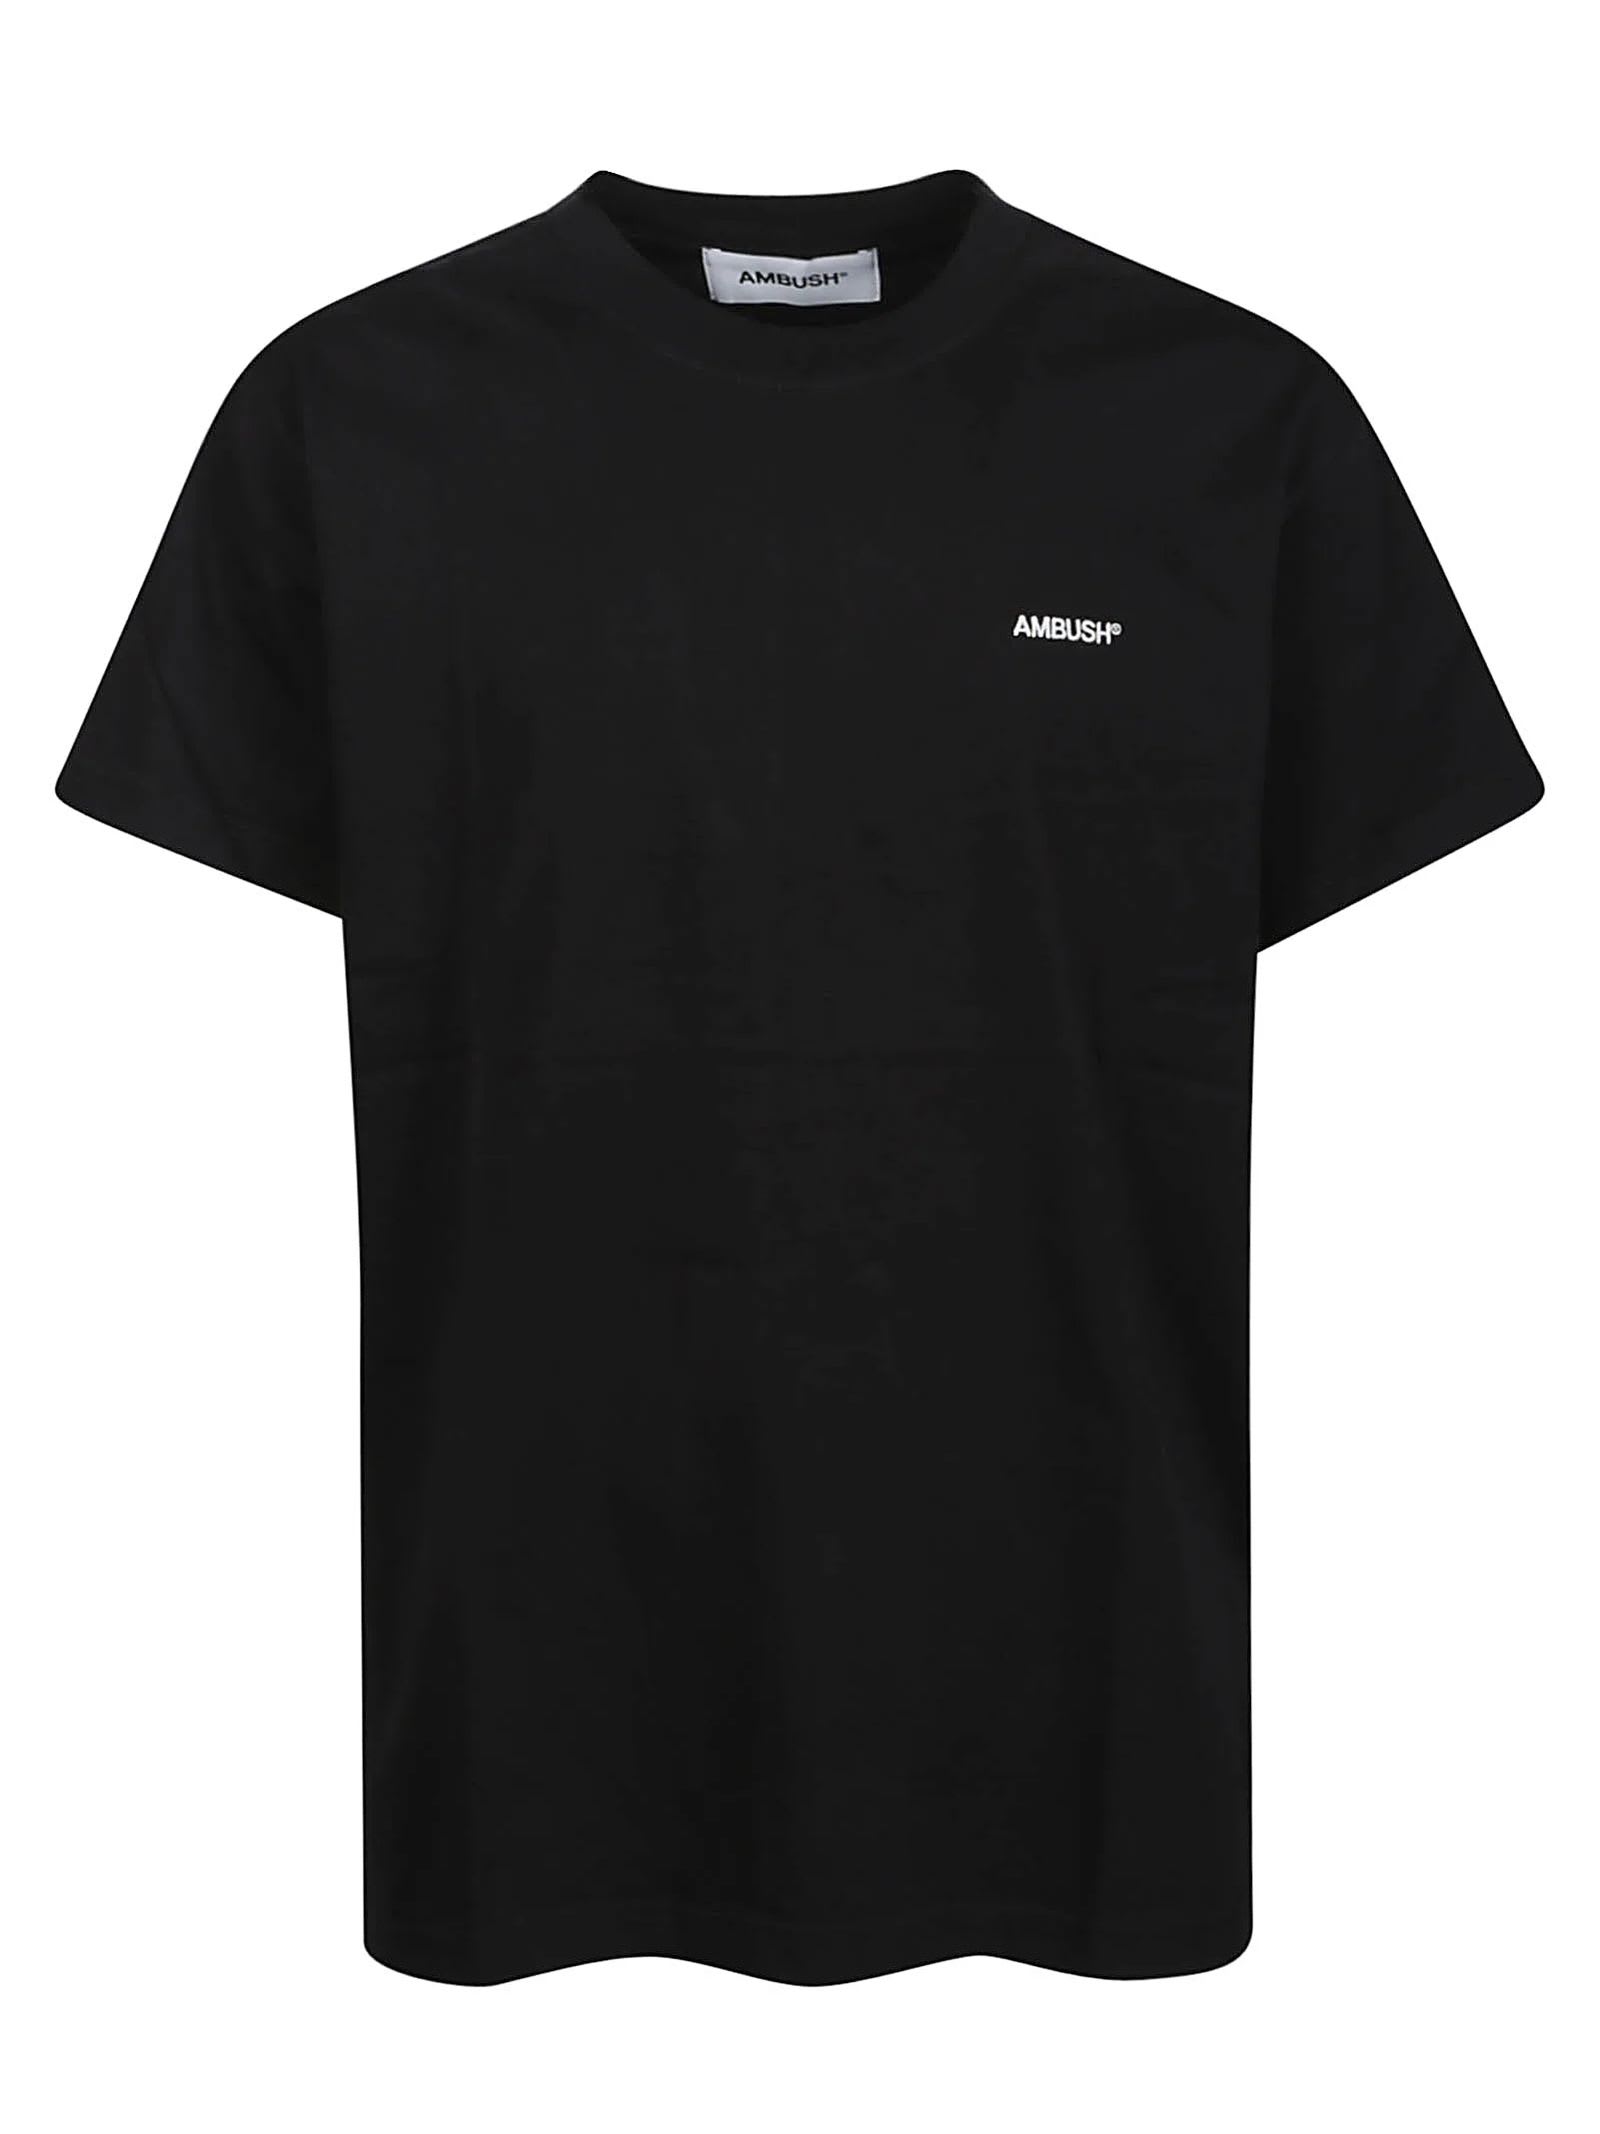 Ambush Black Cotton T-Shirt Set (Set Of Three)